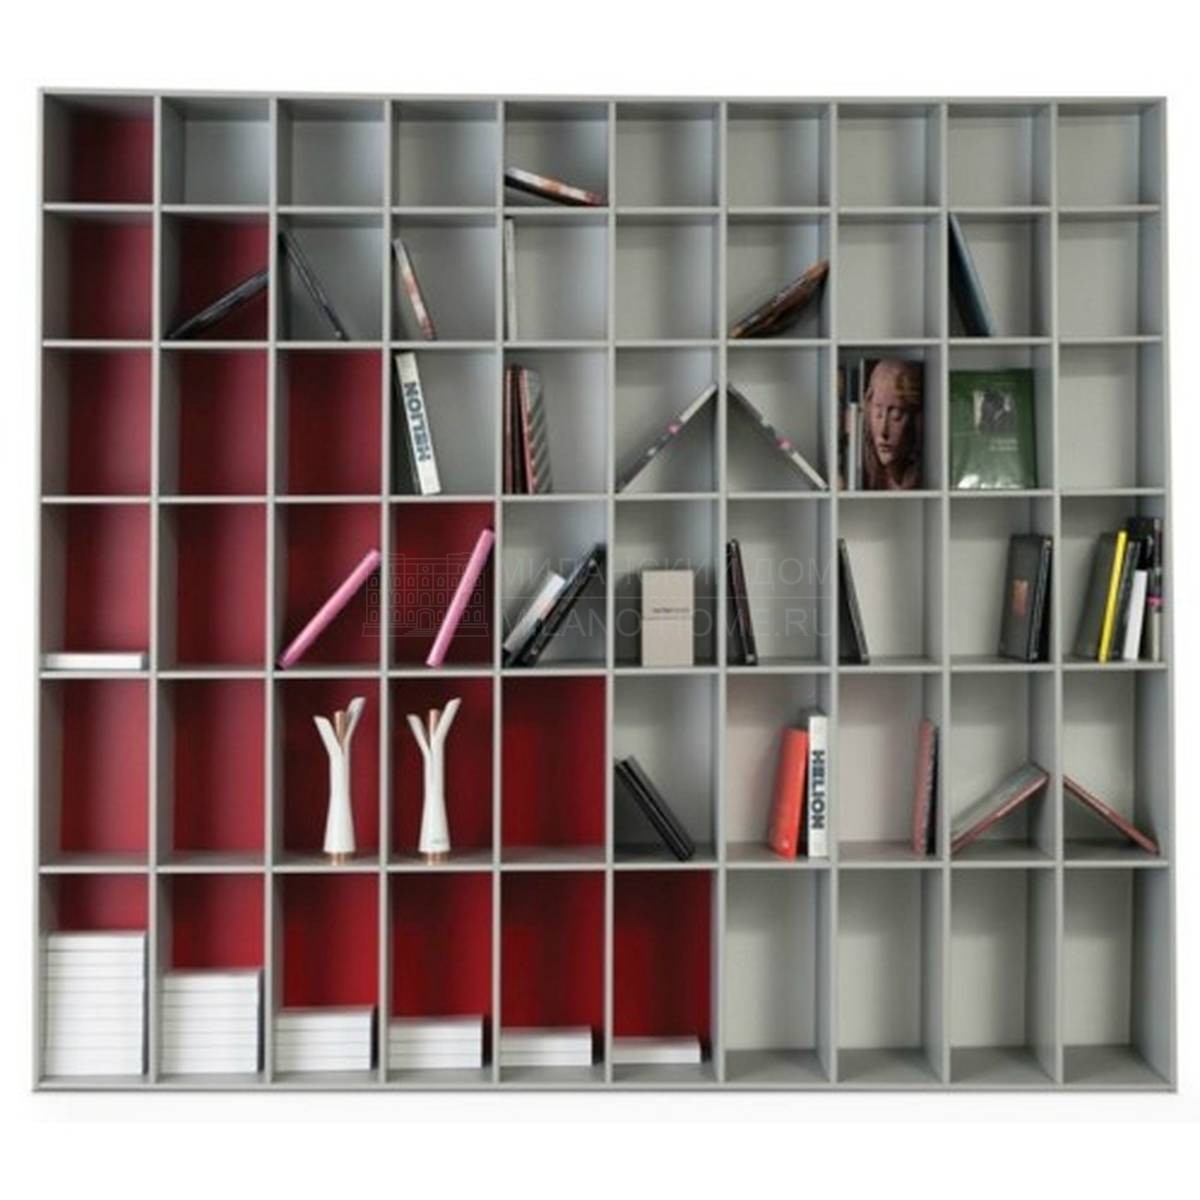 Книжный шкаф Helis bookcase из Франции фабрики ROCHE BOBOIS